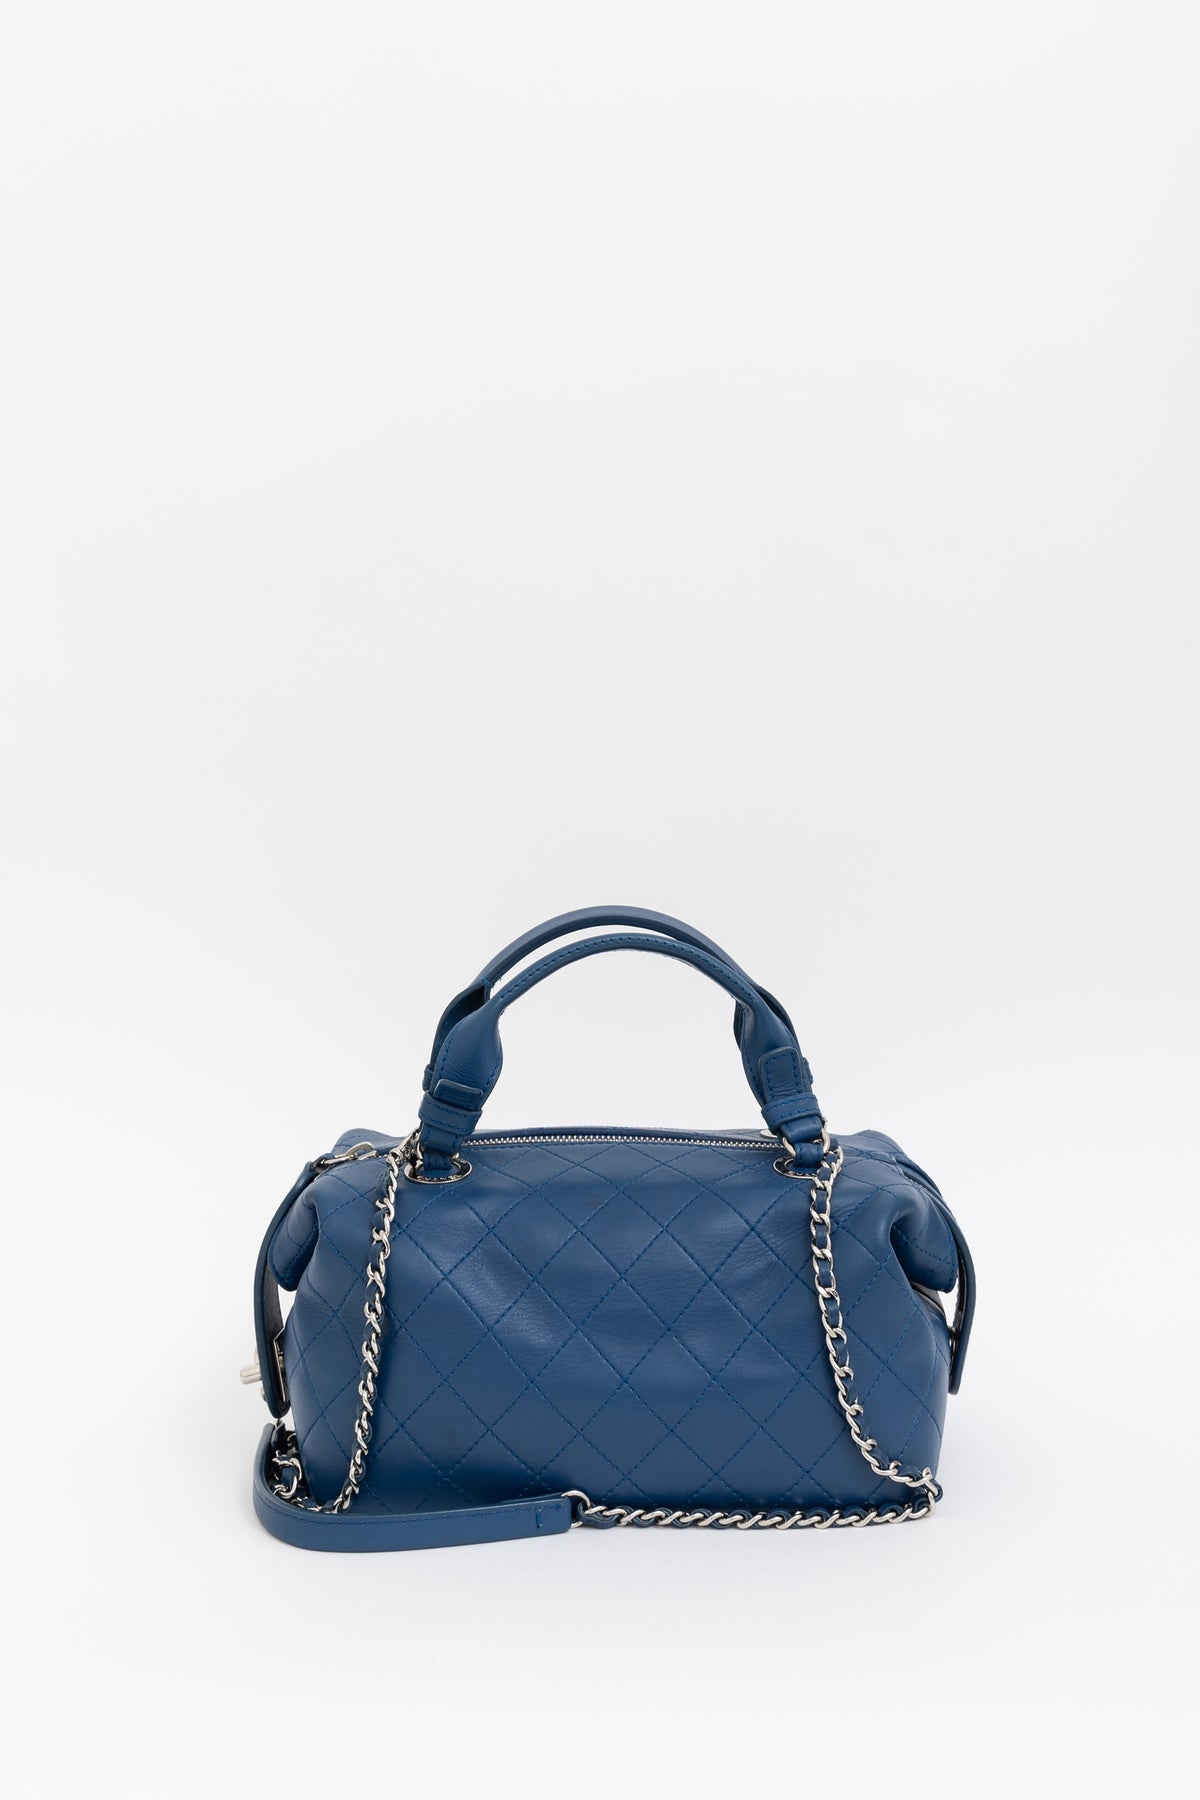 CHANEL Caviar Quilted Mini Bowling Tassel Bag Blue